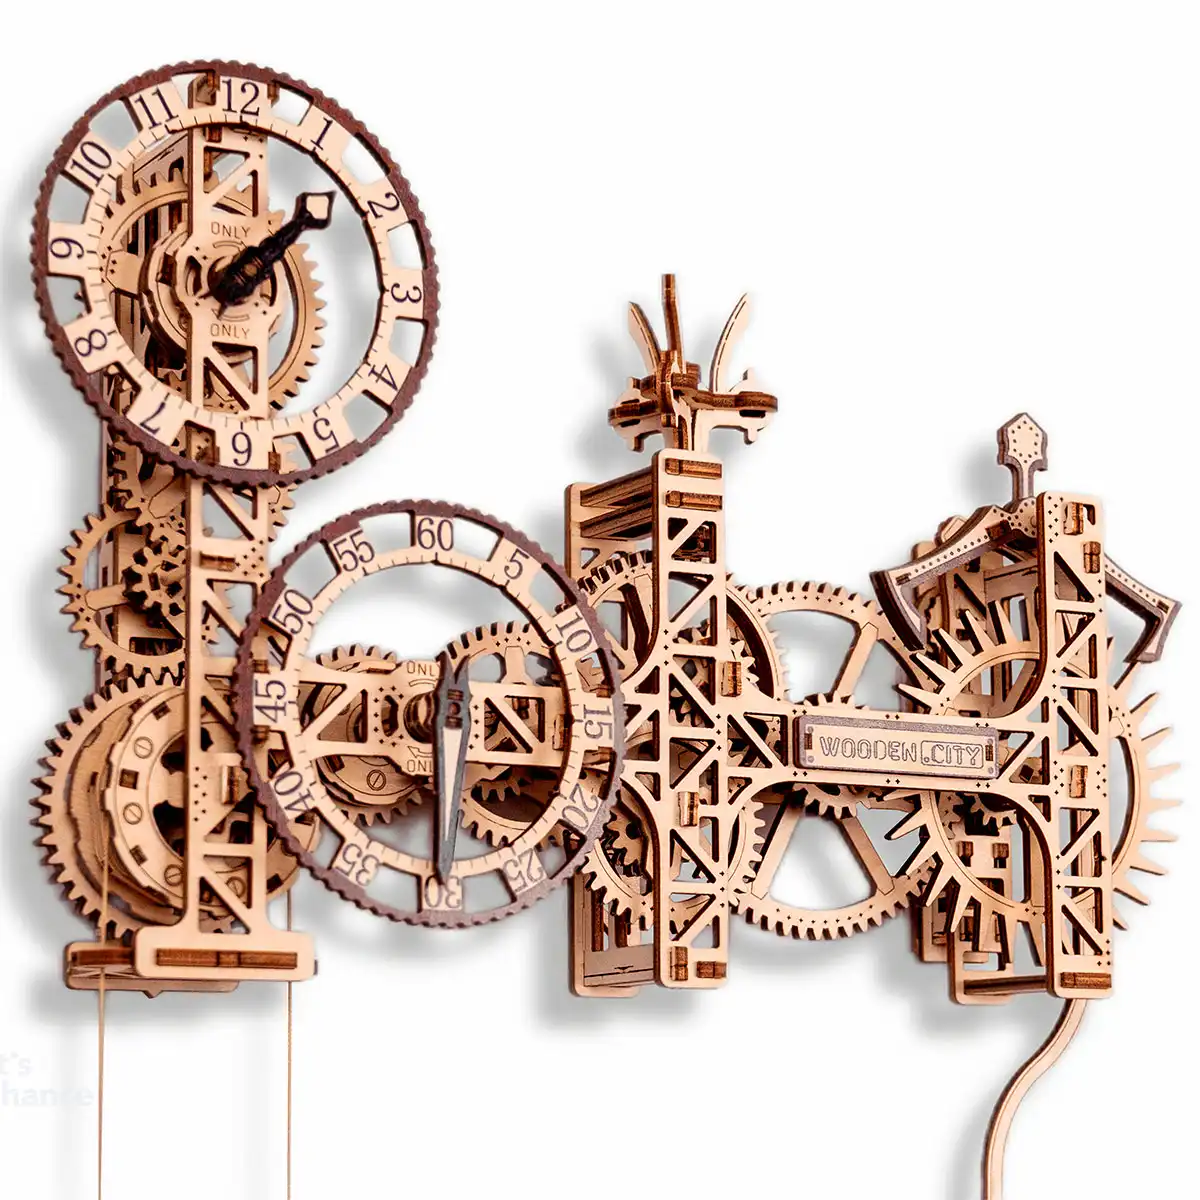 3D Wooden Clock Puzzle - Steampunk Wall Clock